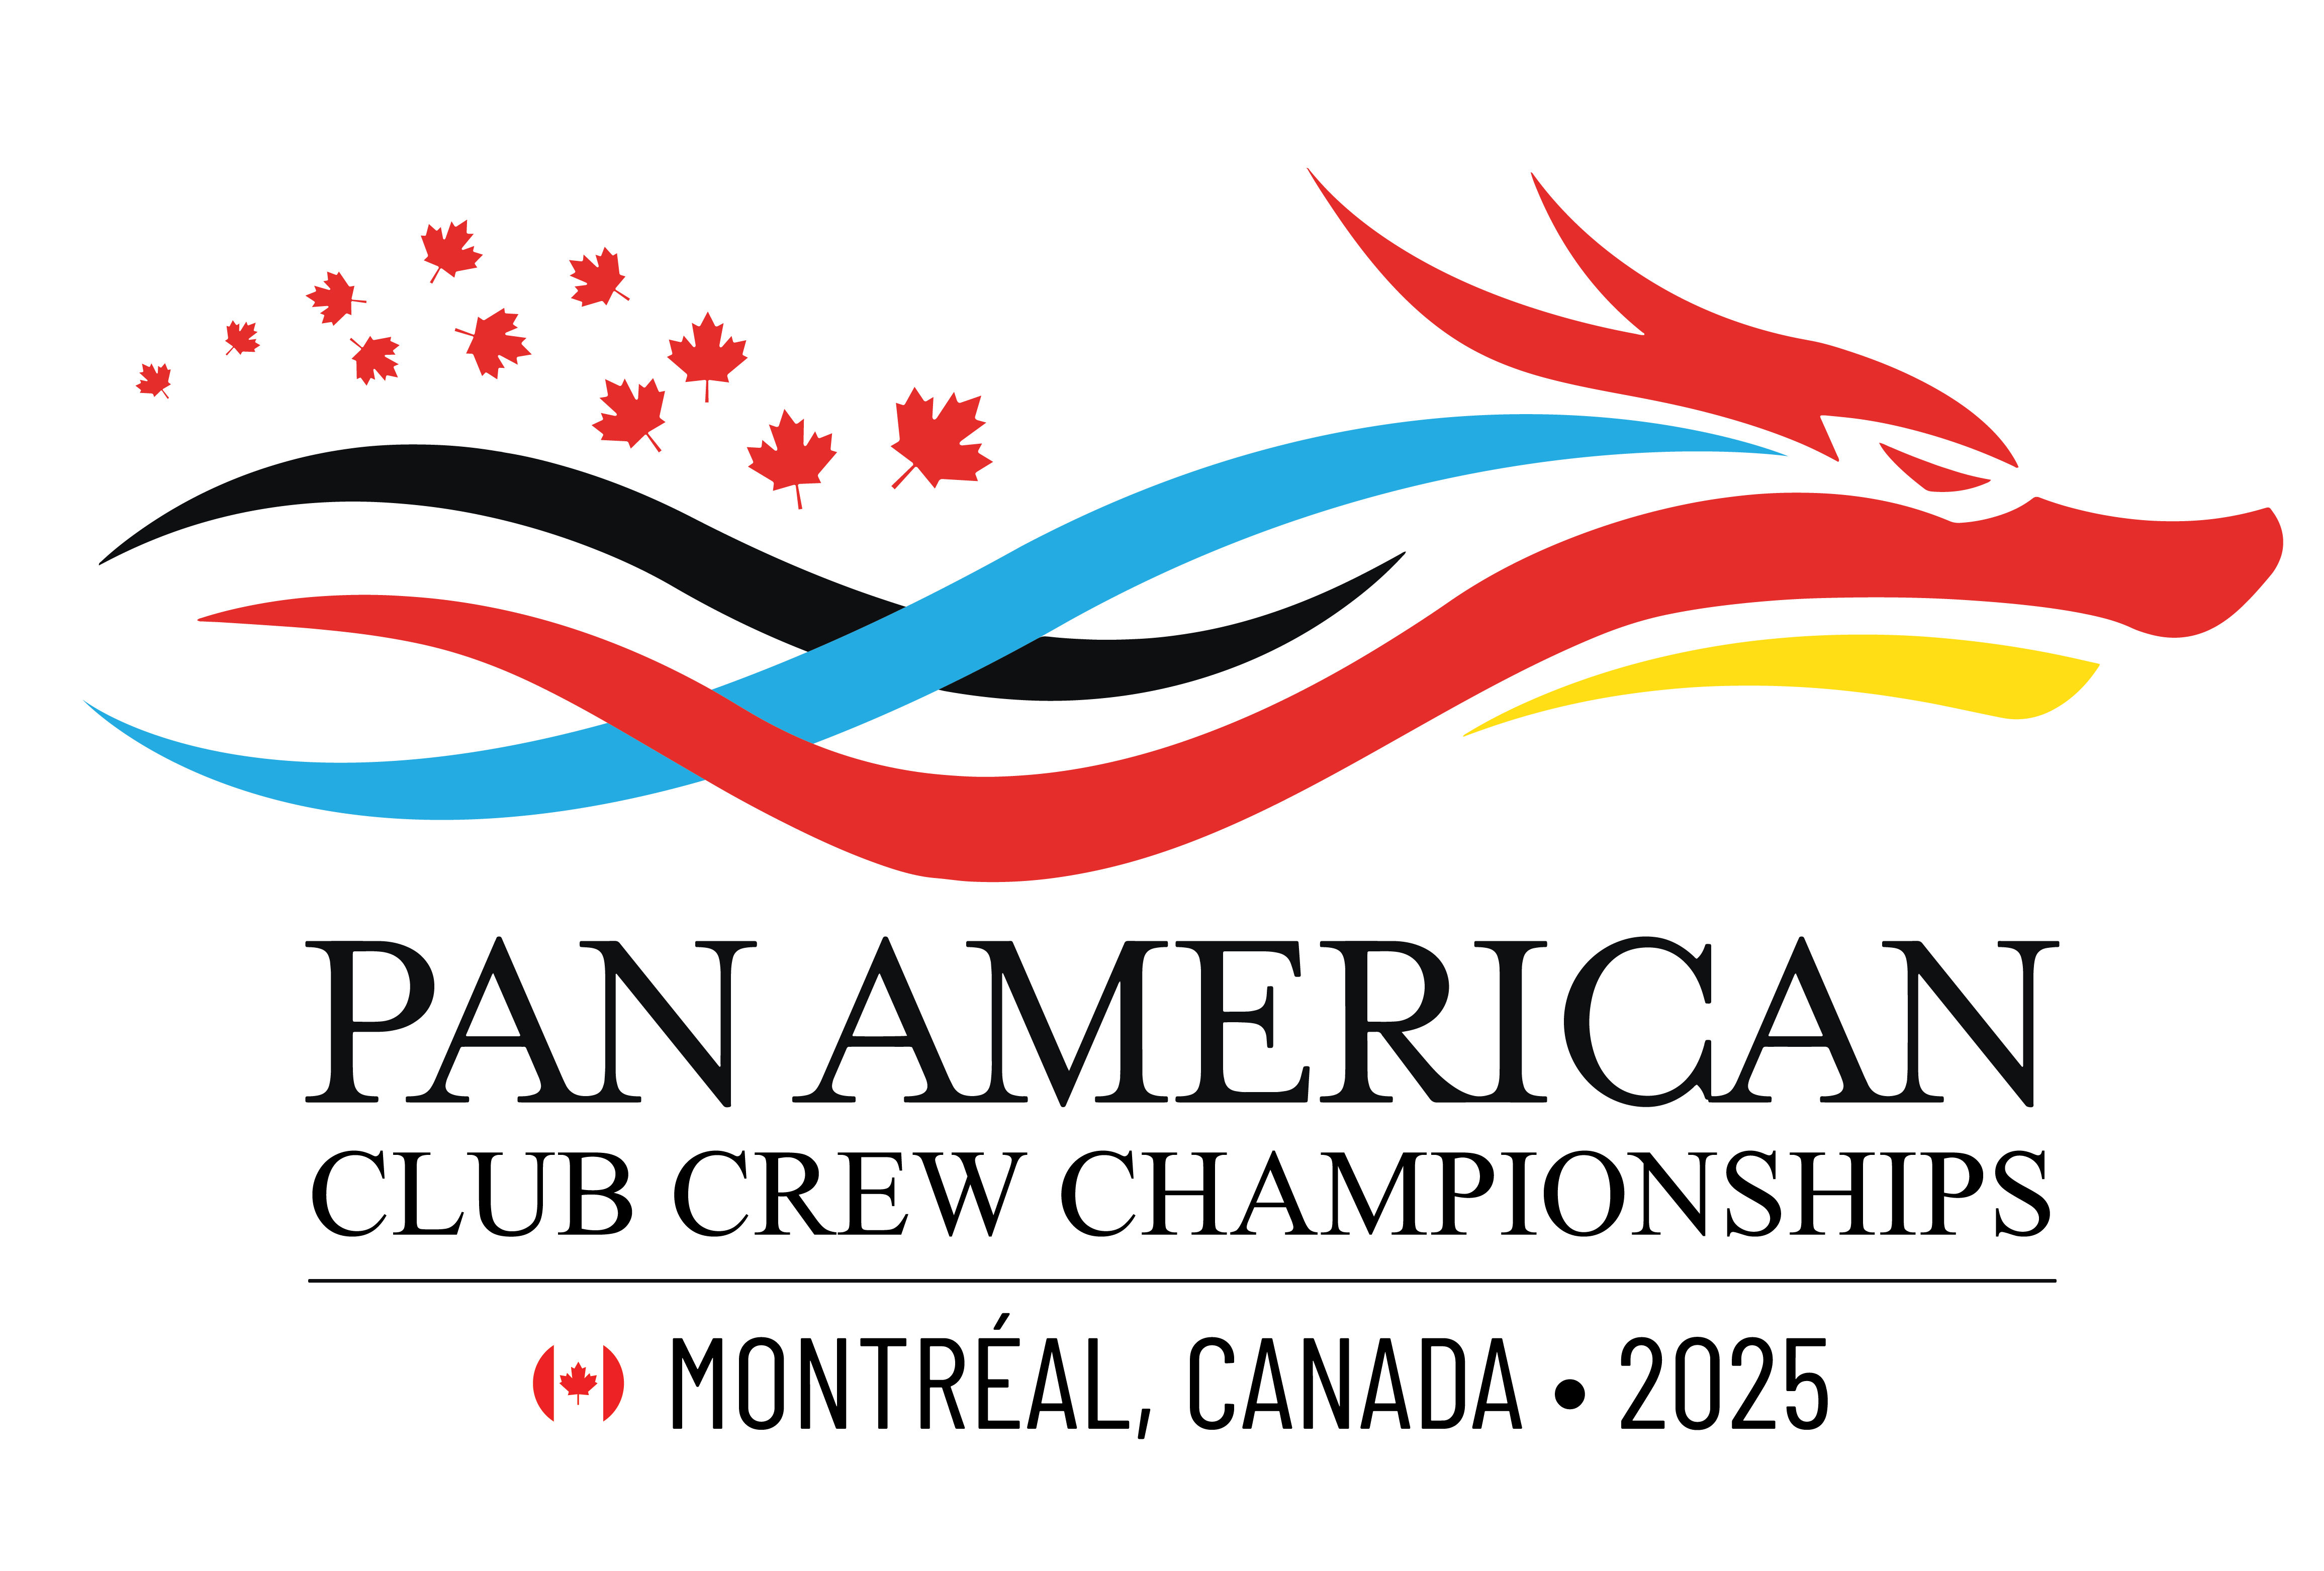 Pan american club crew Championship